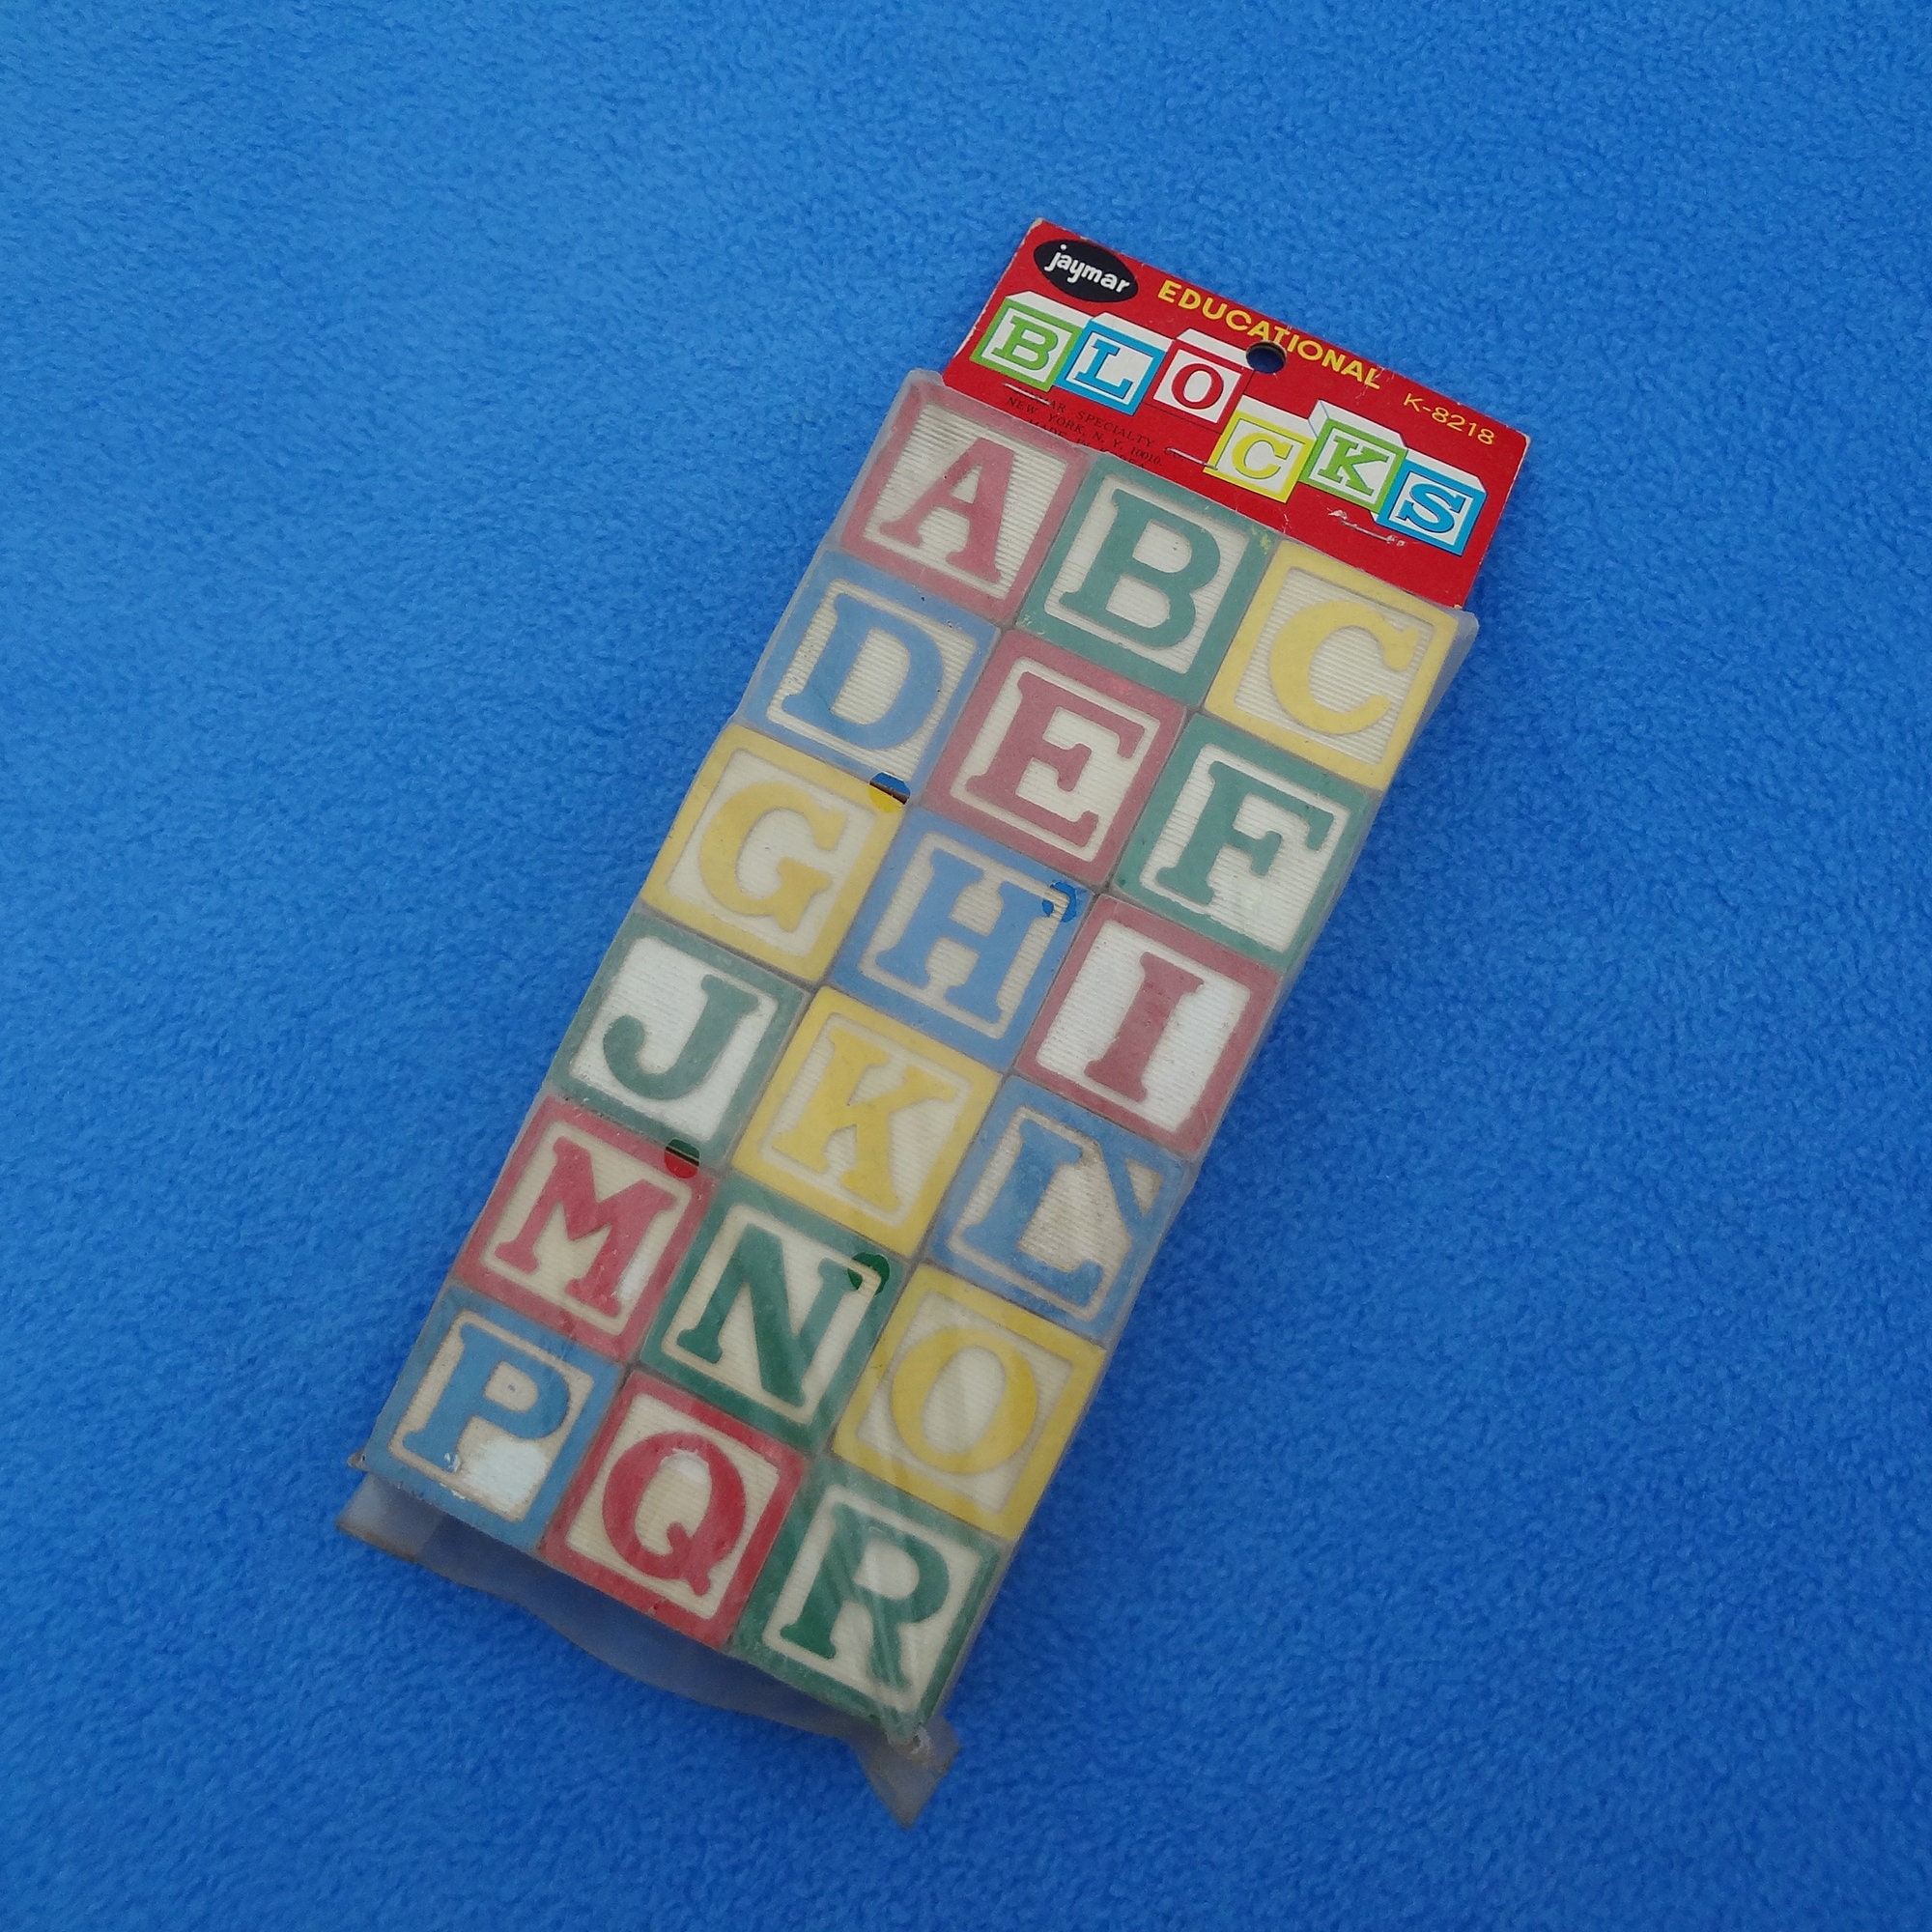 Lot of 55 Vintage Wooden Miscellaneous Sized ABC Alphabet Toy Letter Blocks  GUC